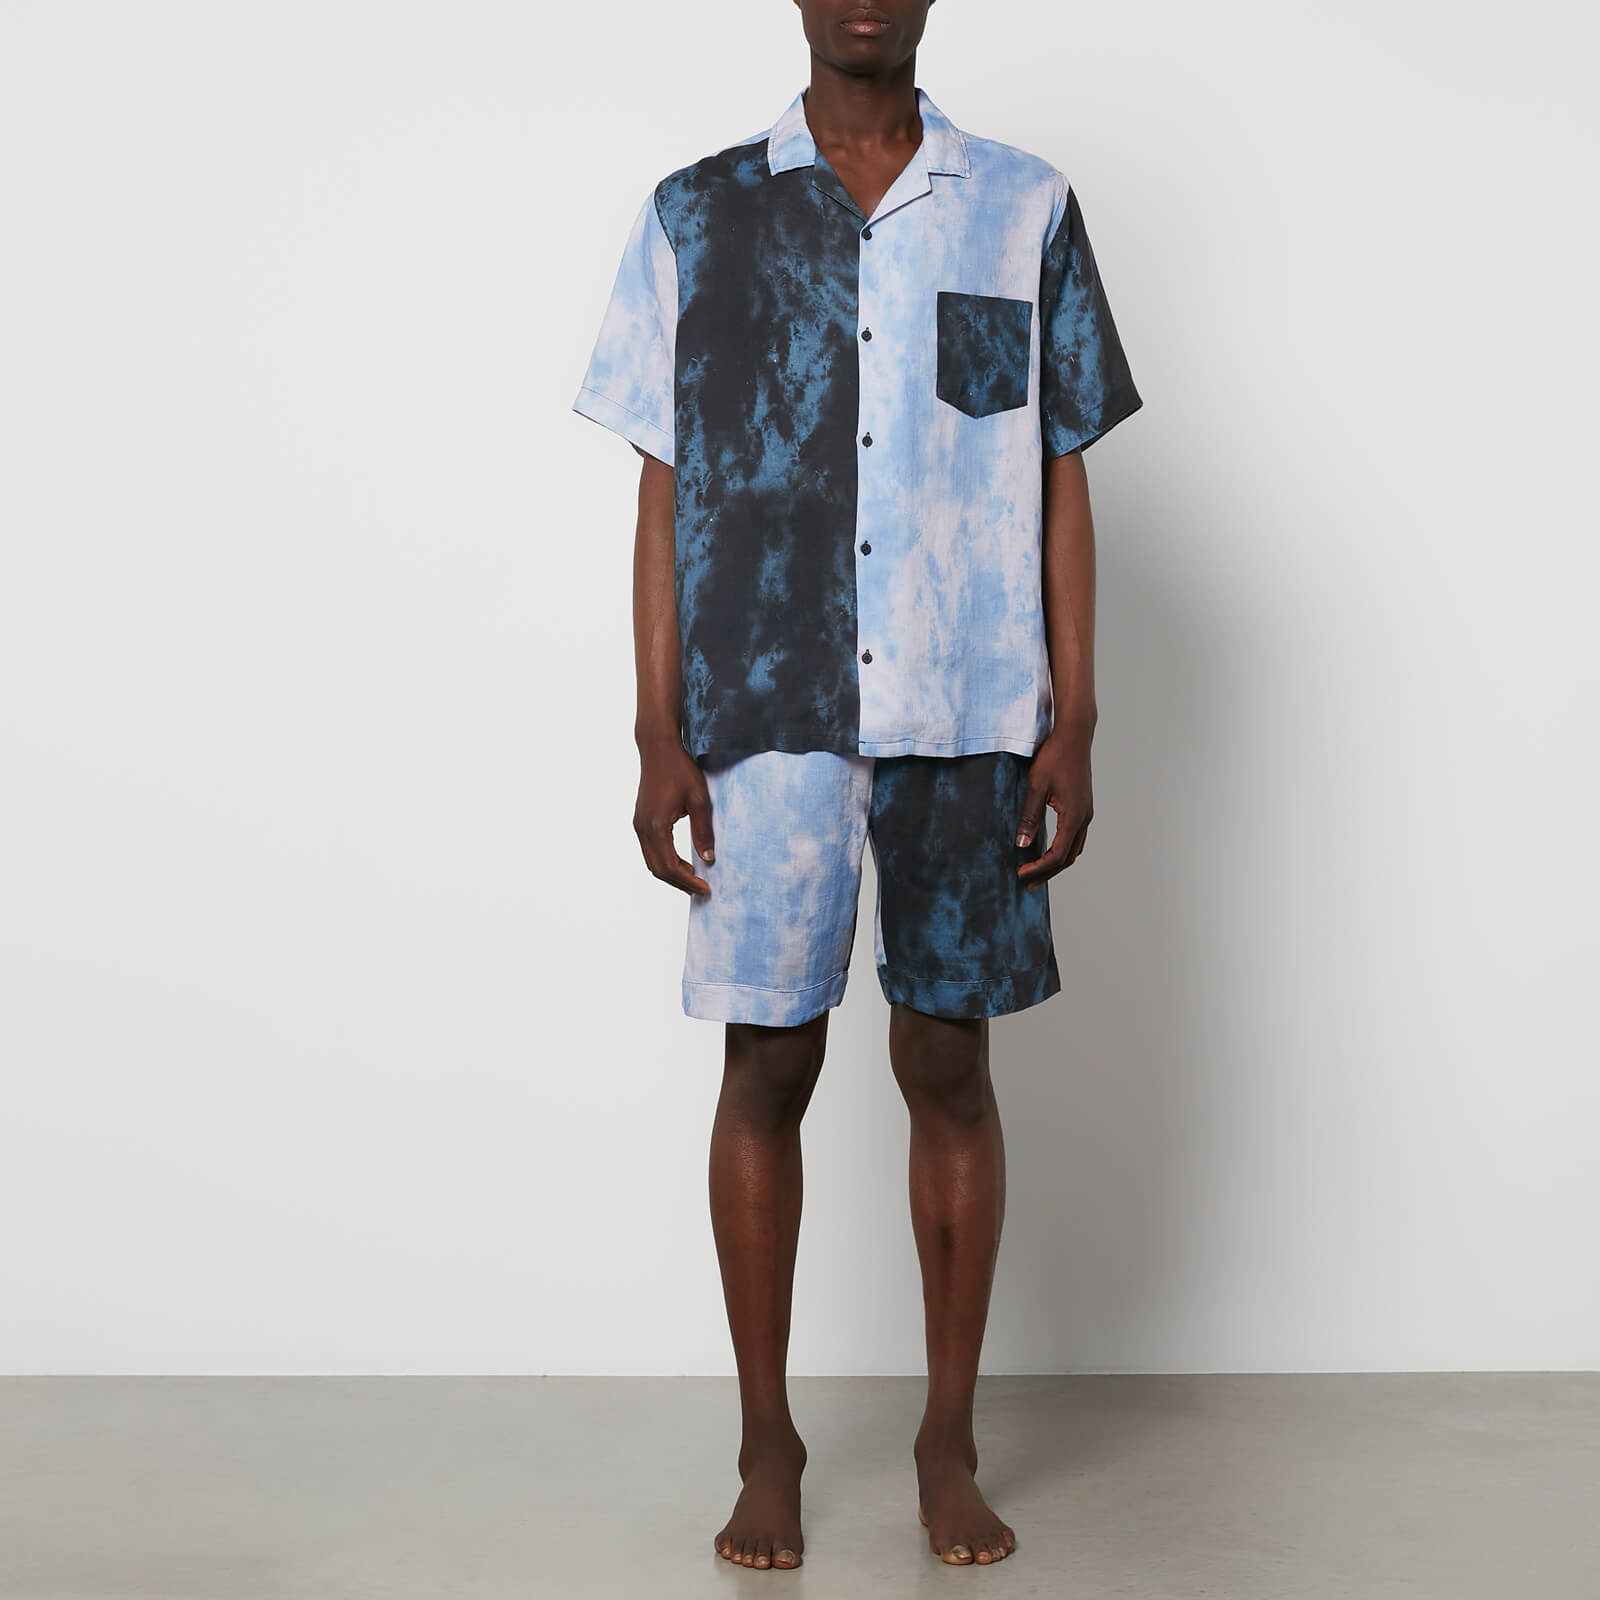 Desmond & Dempsey Men's Summer Dusk Cuban Pyjama Set - Patchwork Navy/Sky Blue - S